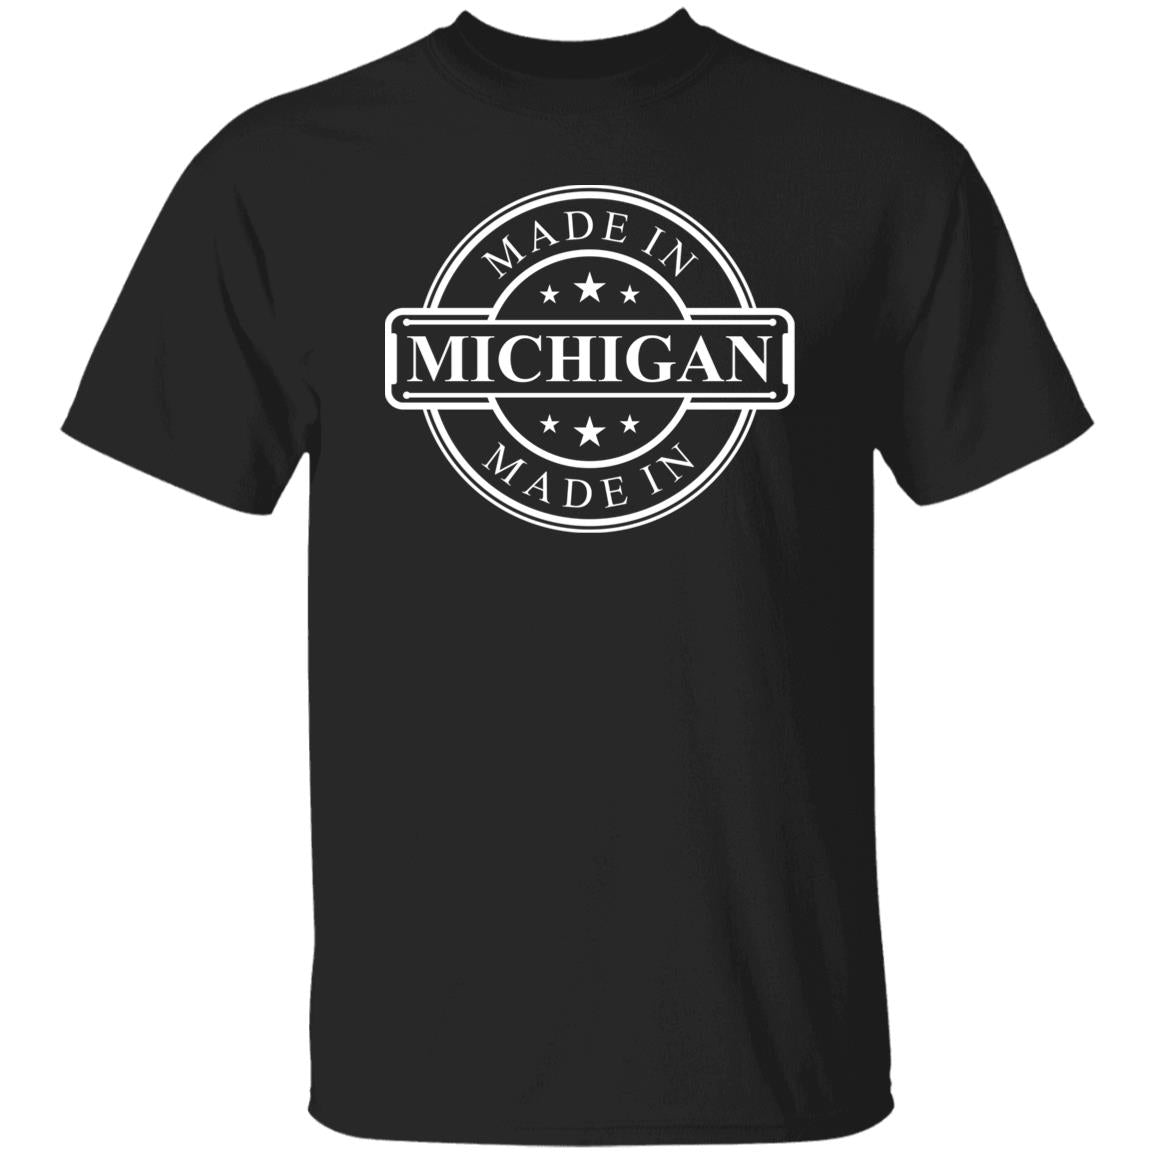 Made in Michigan - White G500 5.3 oz. T-Shirt